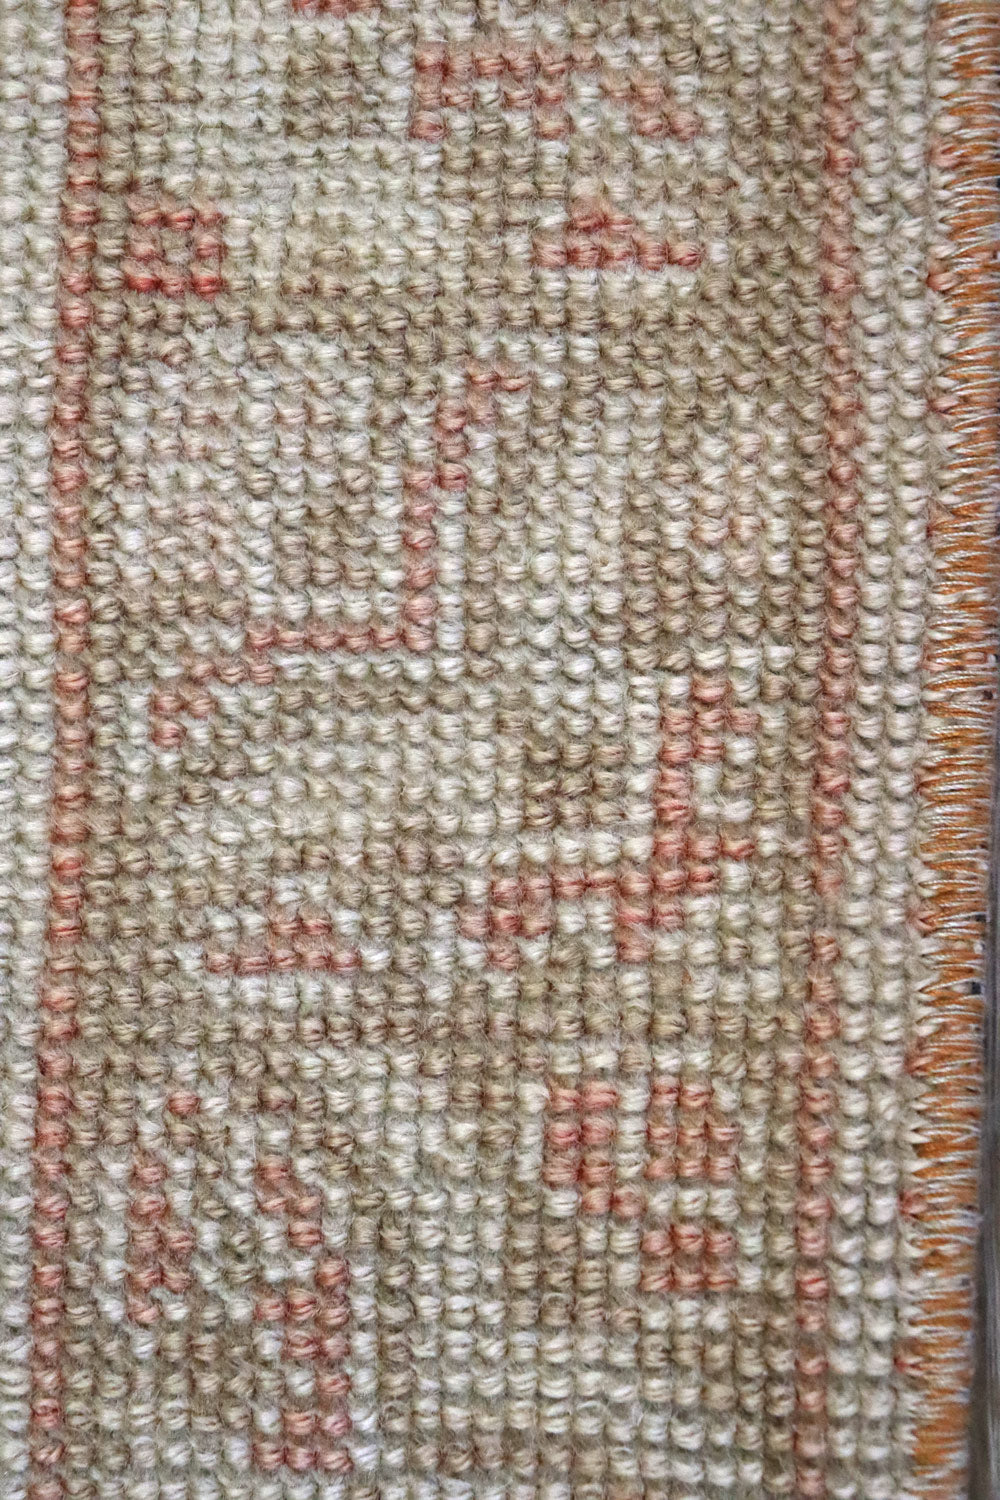 VintageHandwoven Traditional Rug, J67978